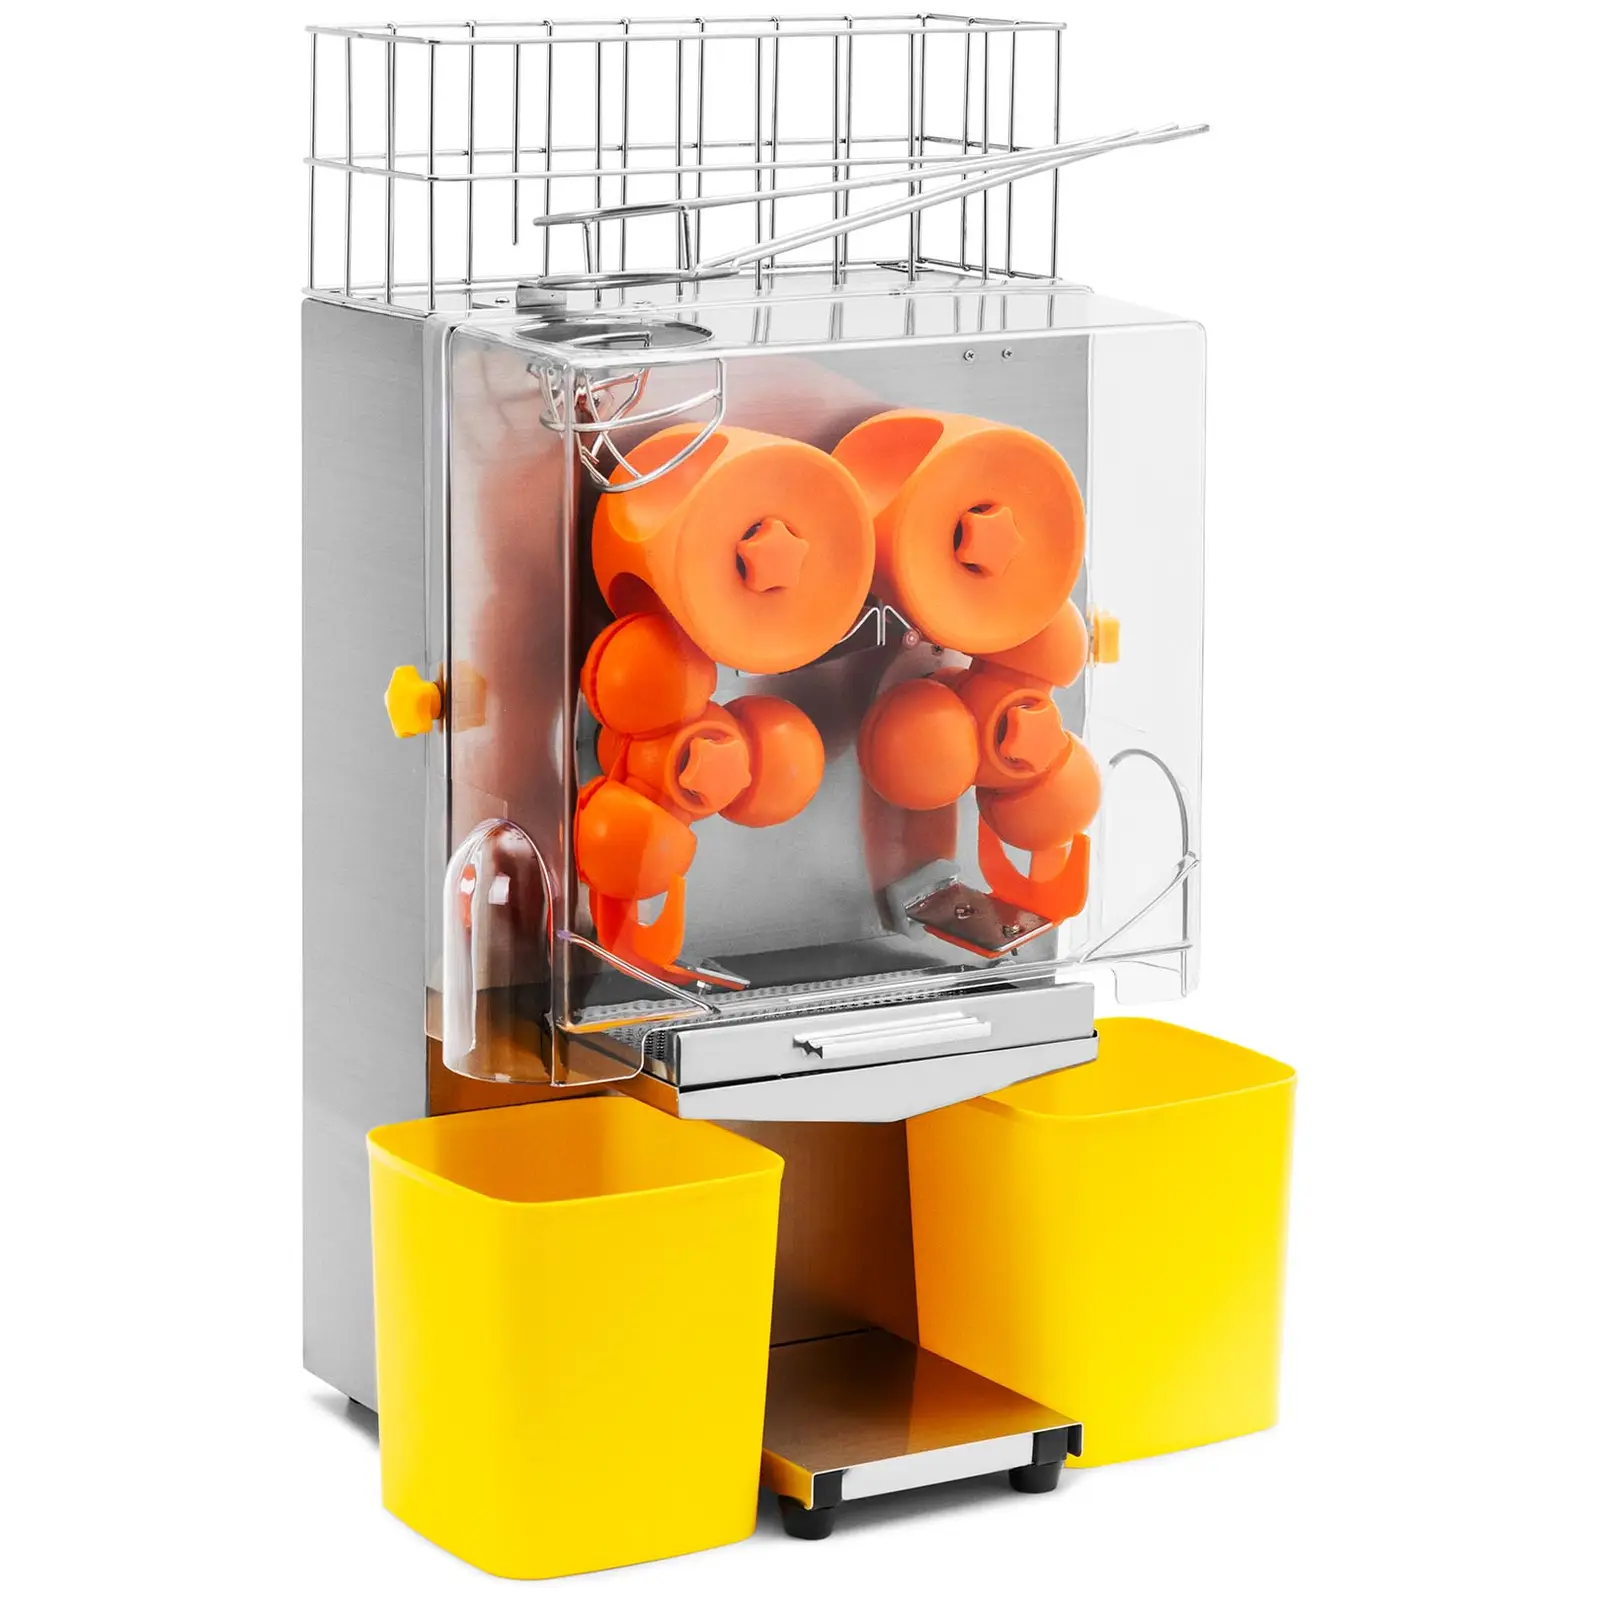 Orange press electric - 120 W - Royal Catering